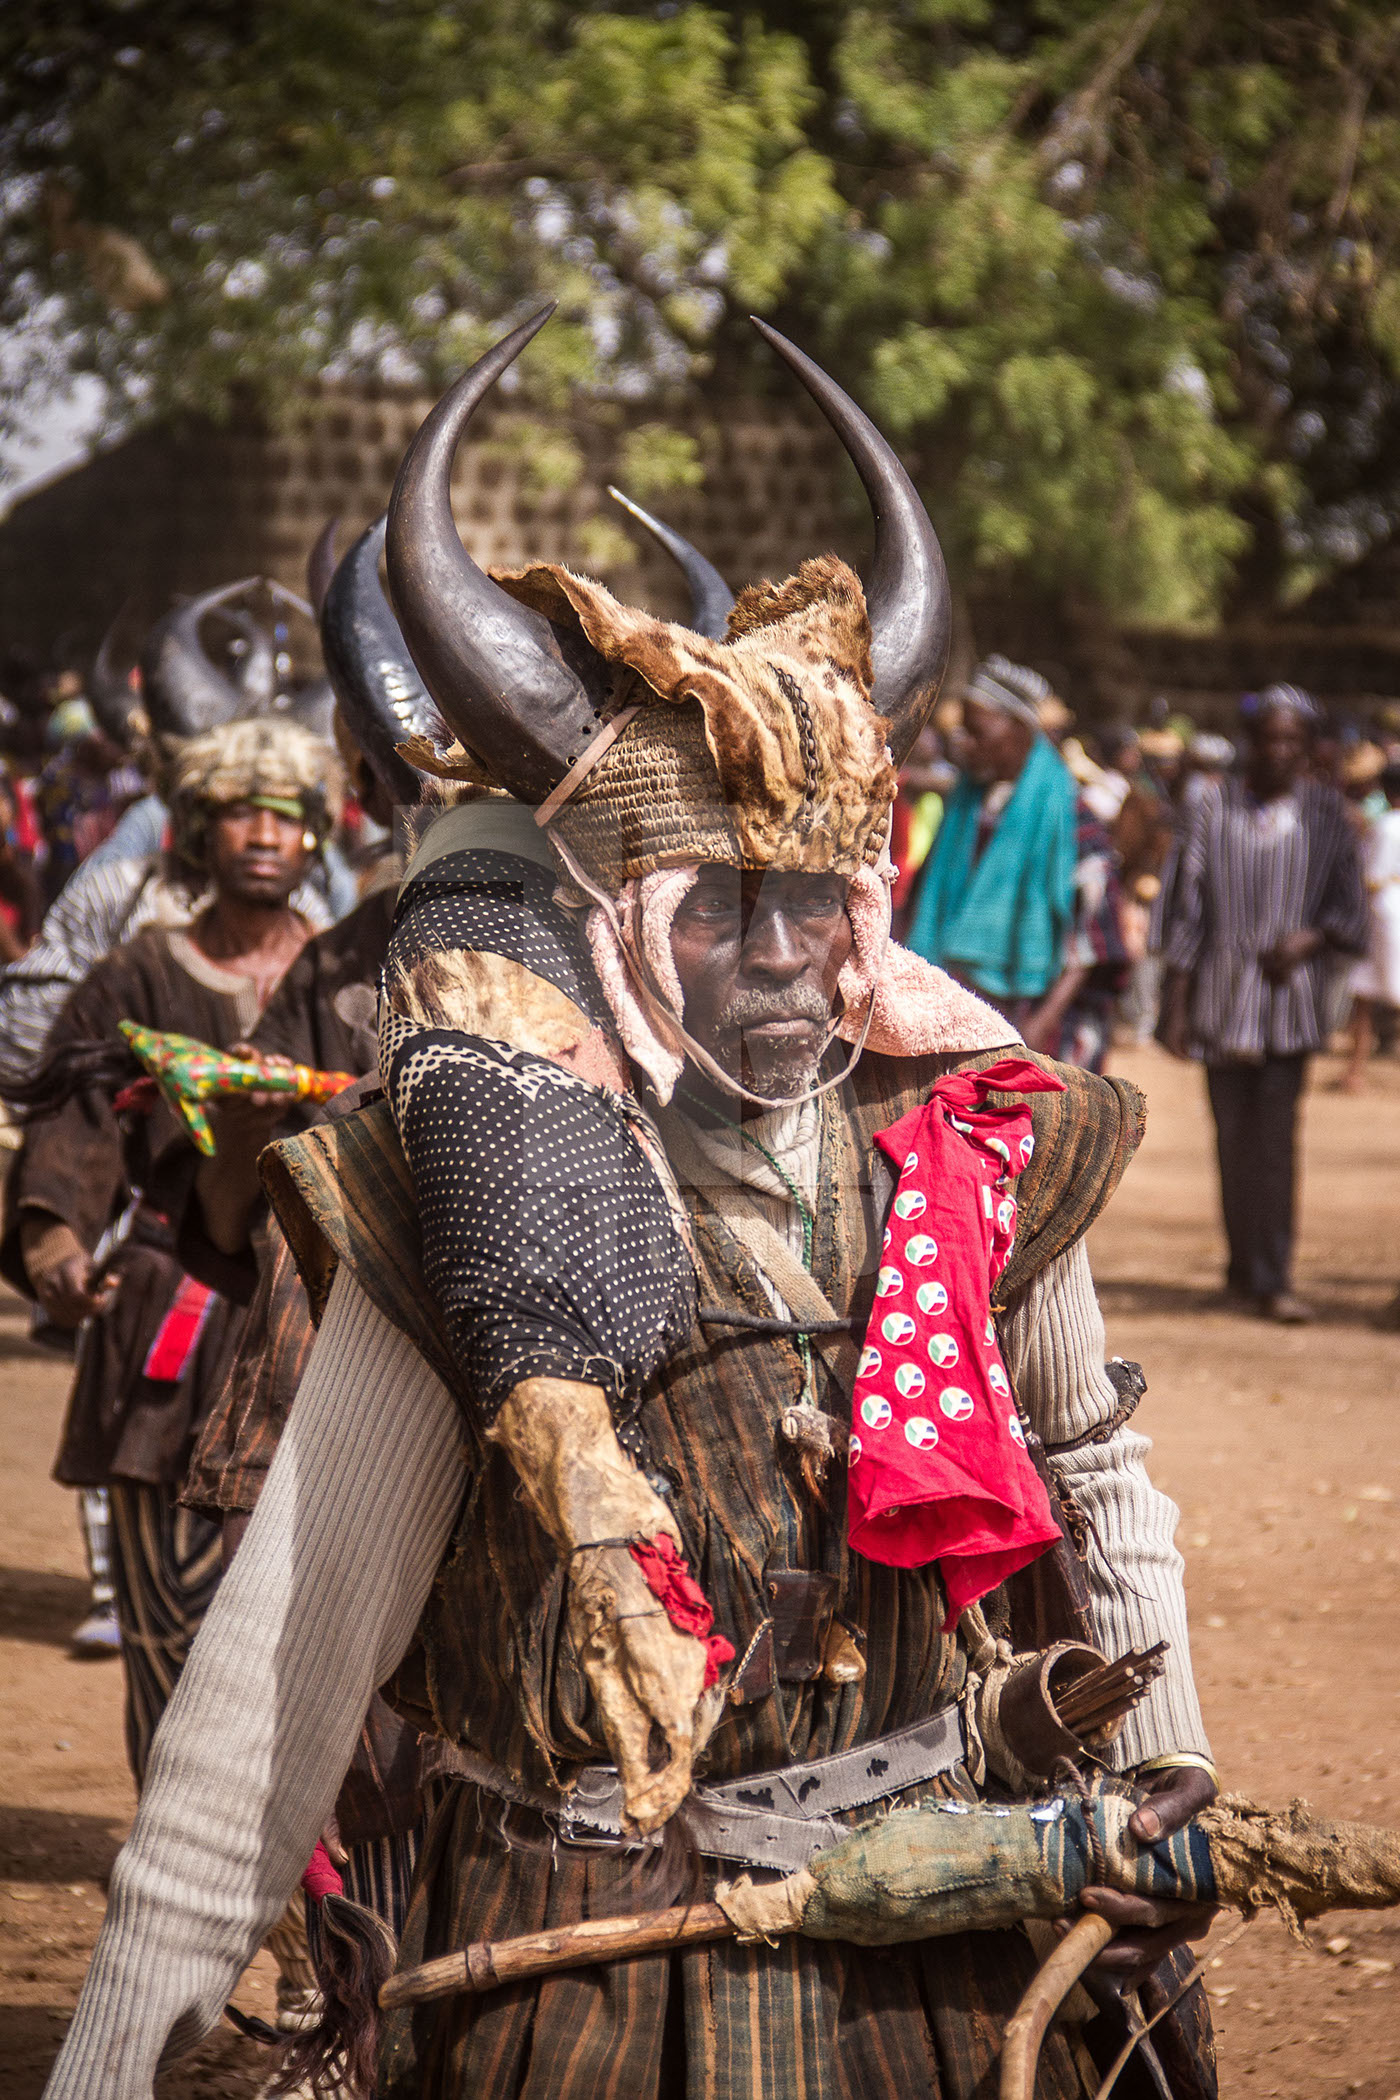 tradition africa culture WarDance tribal Ghana westafrica Feok festival